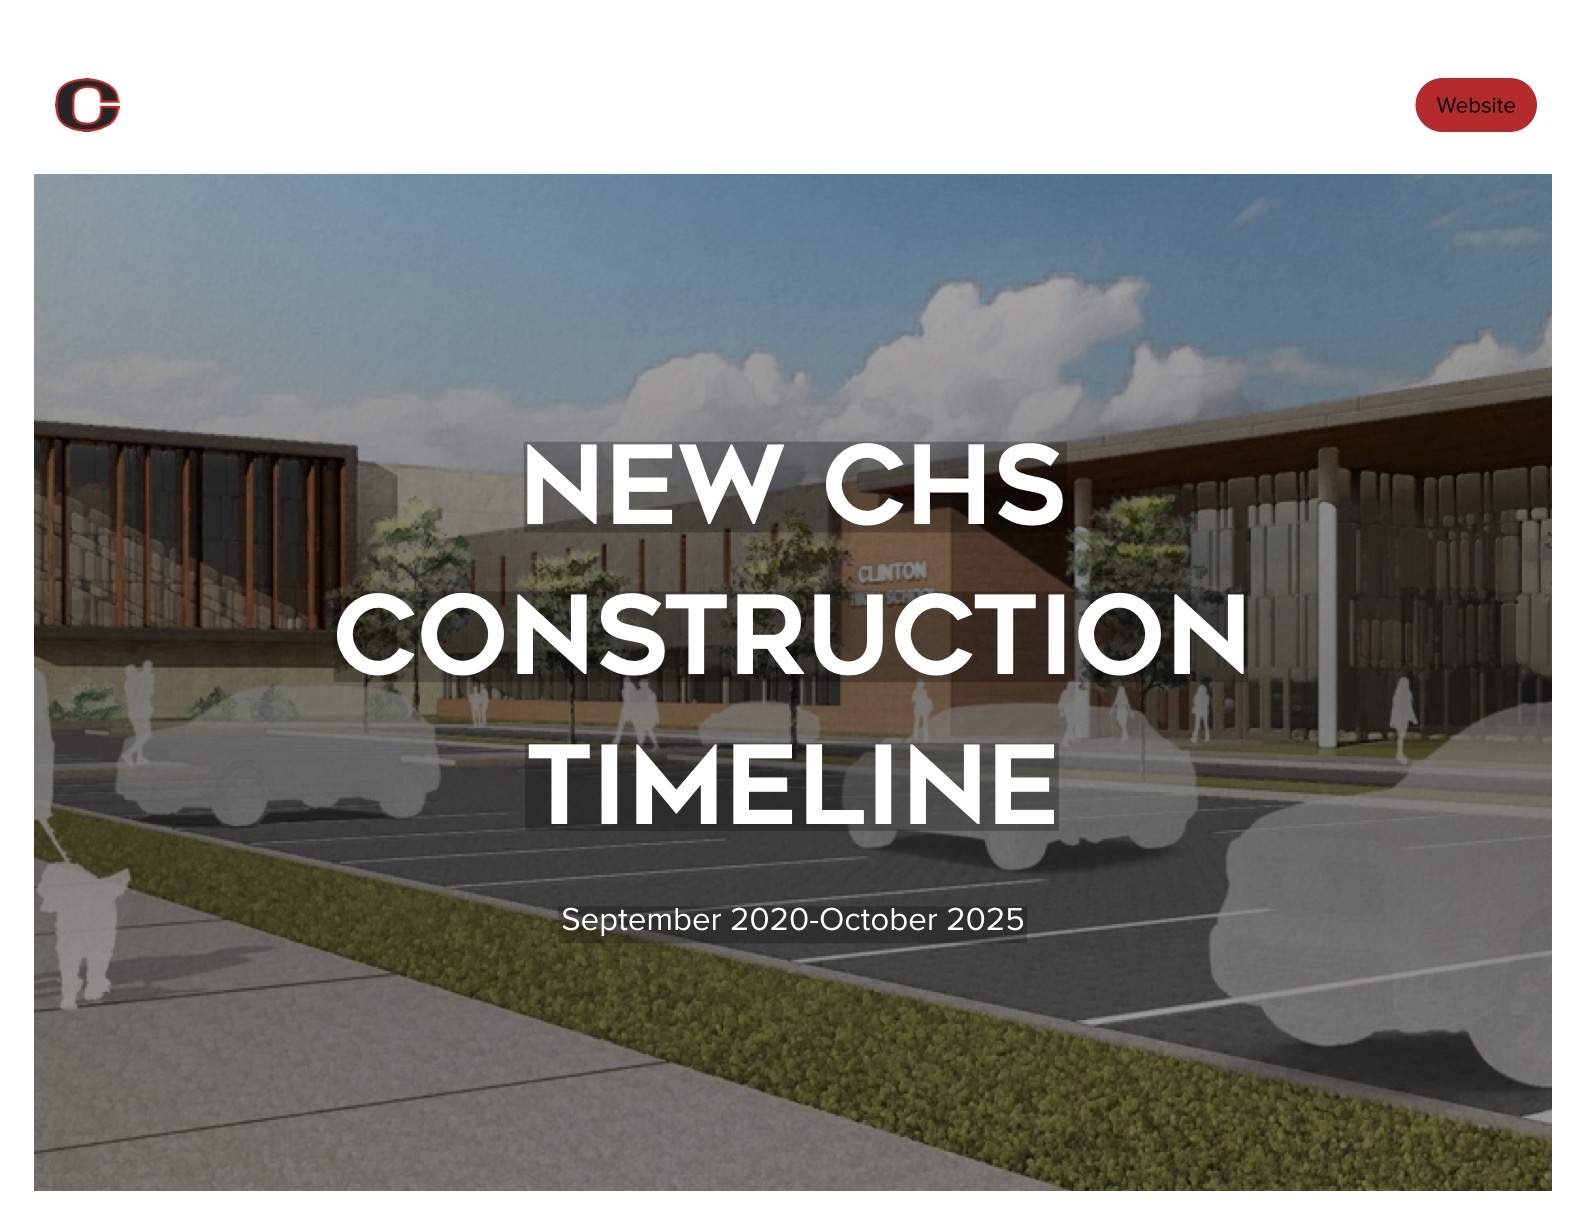 Timeline and Construction Progress Updates